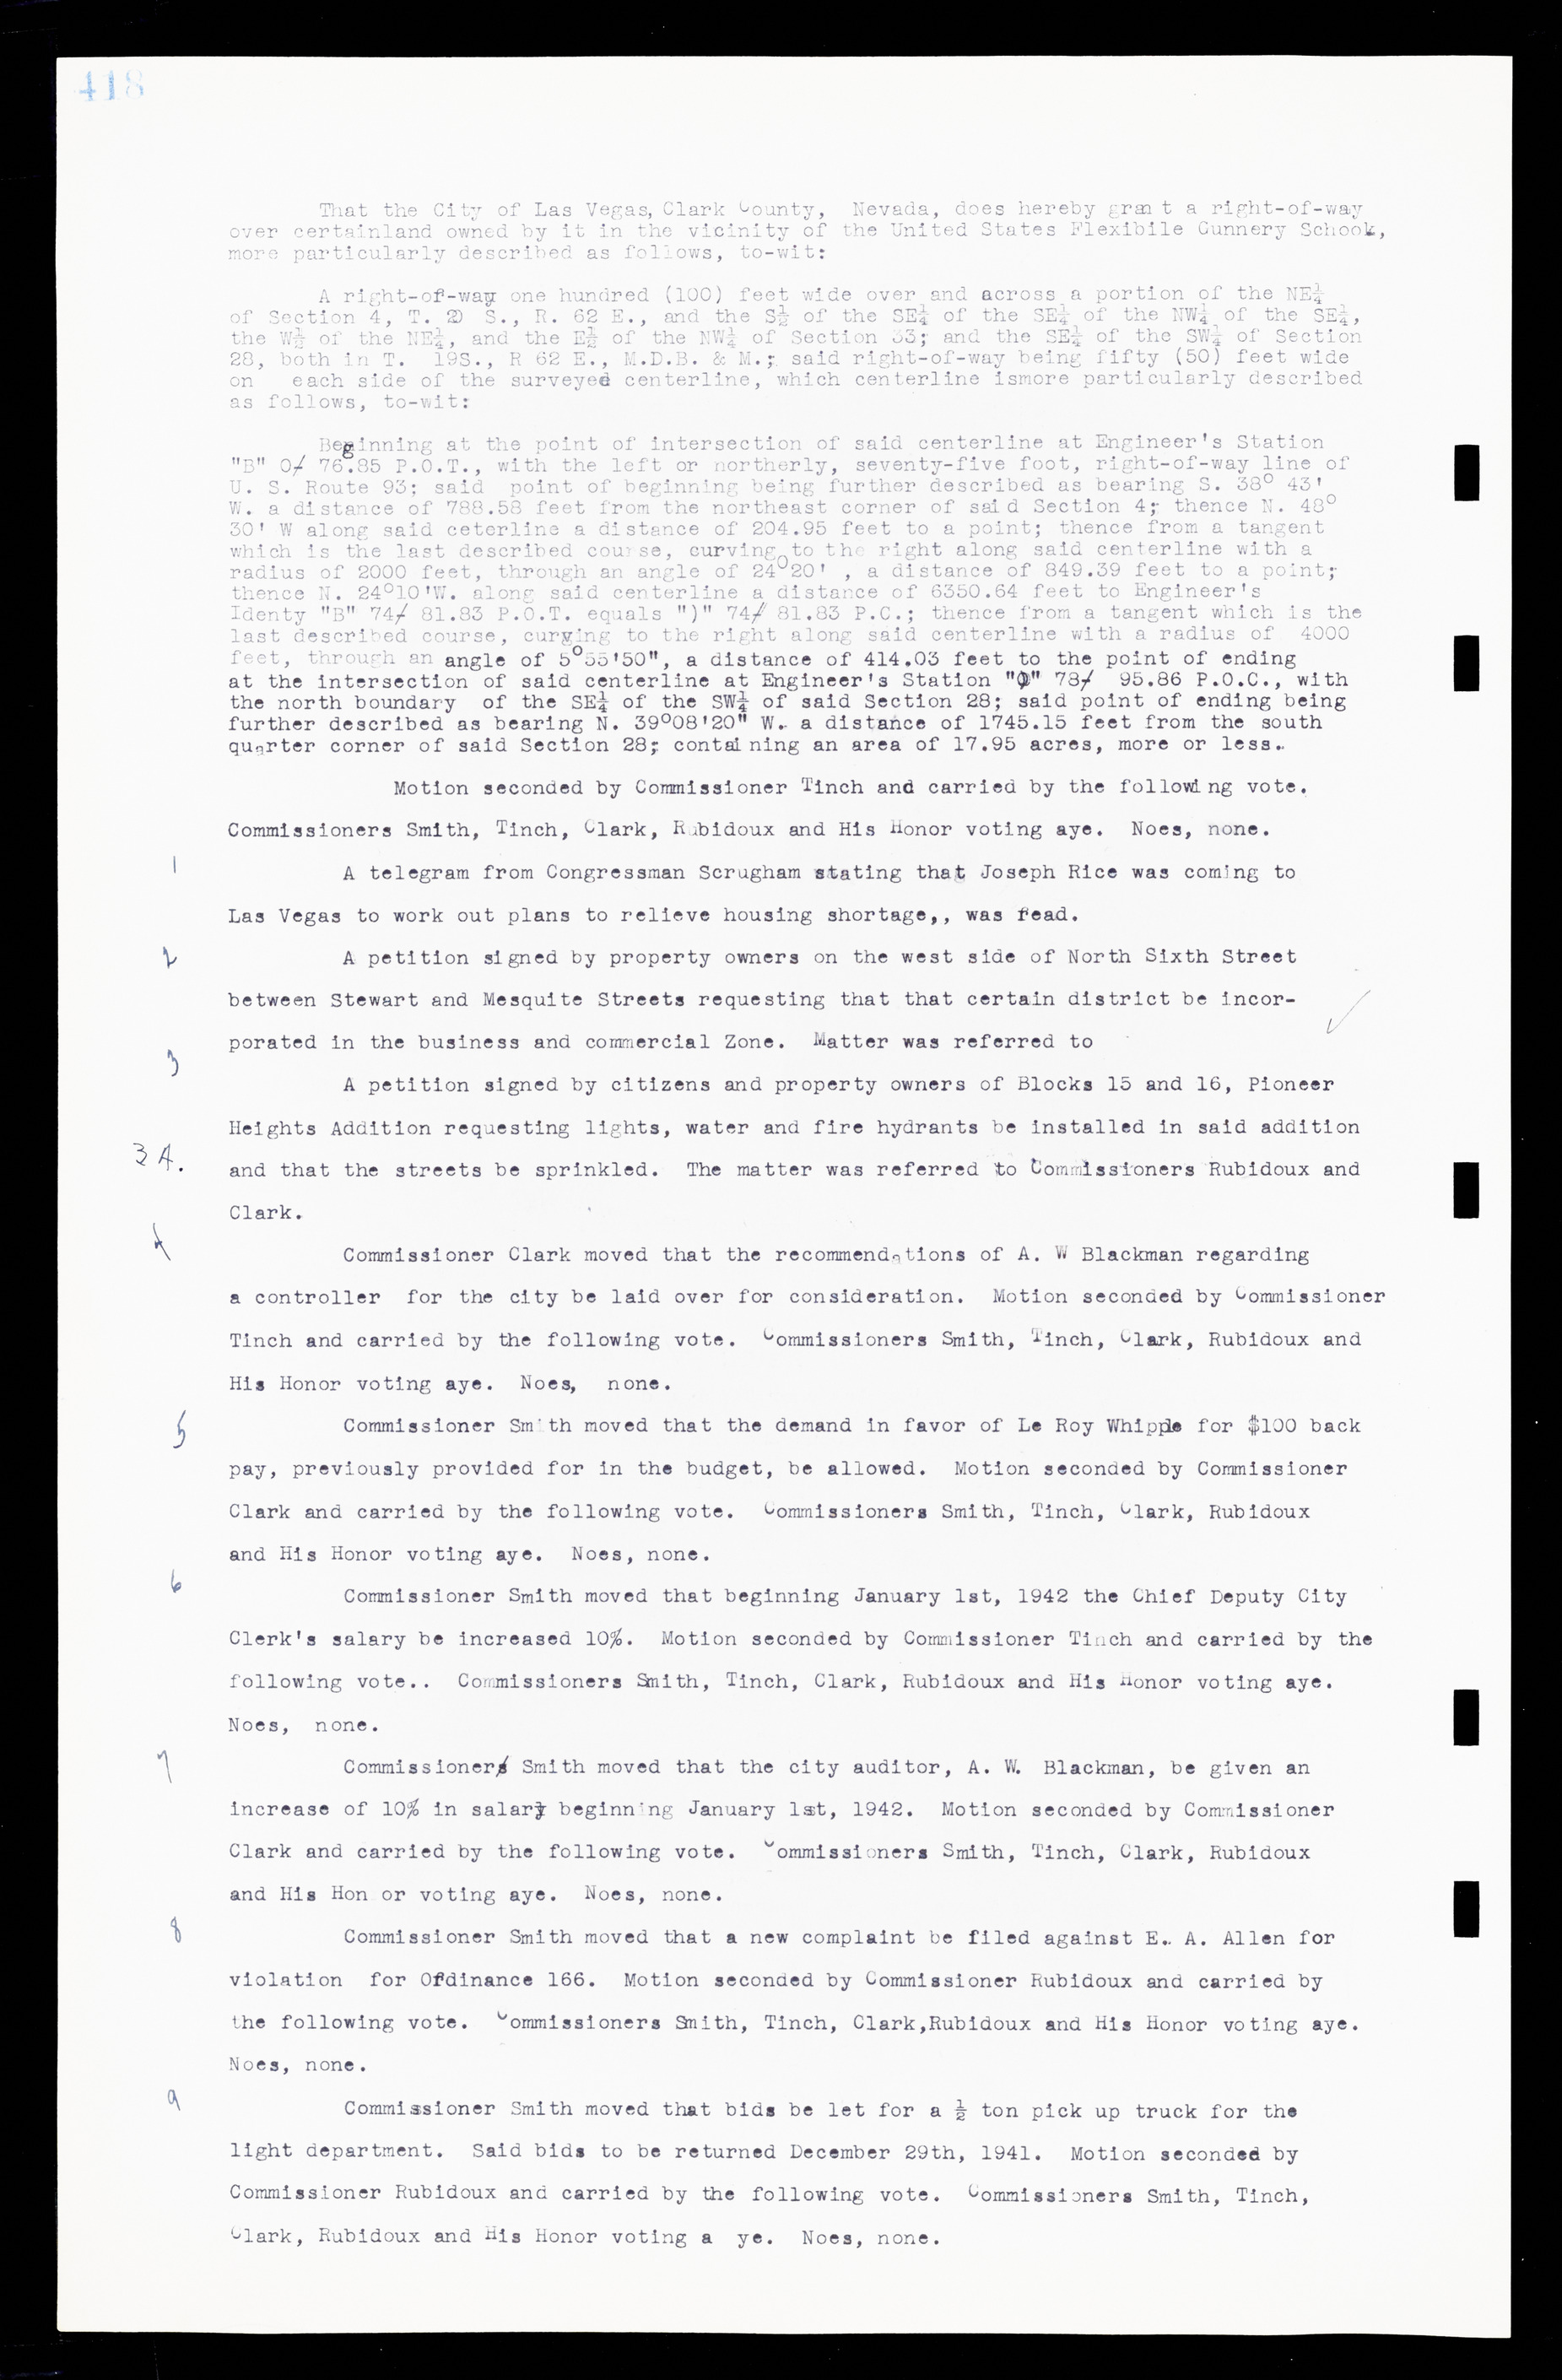 Las Vegas City Commission Minutes, February 17, 1937 to August 4, 1942, lvc000004-444